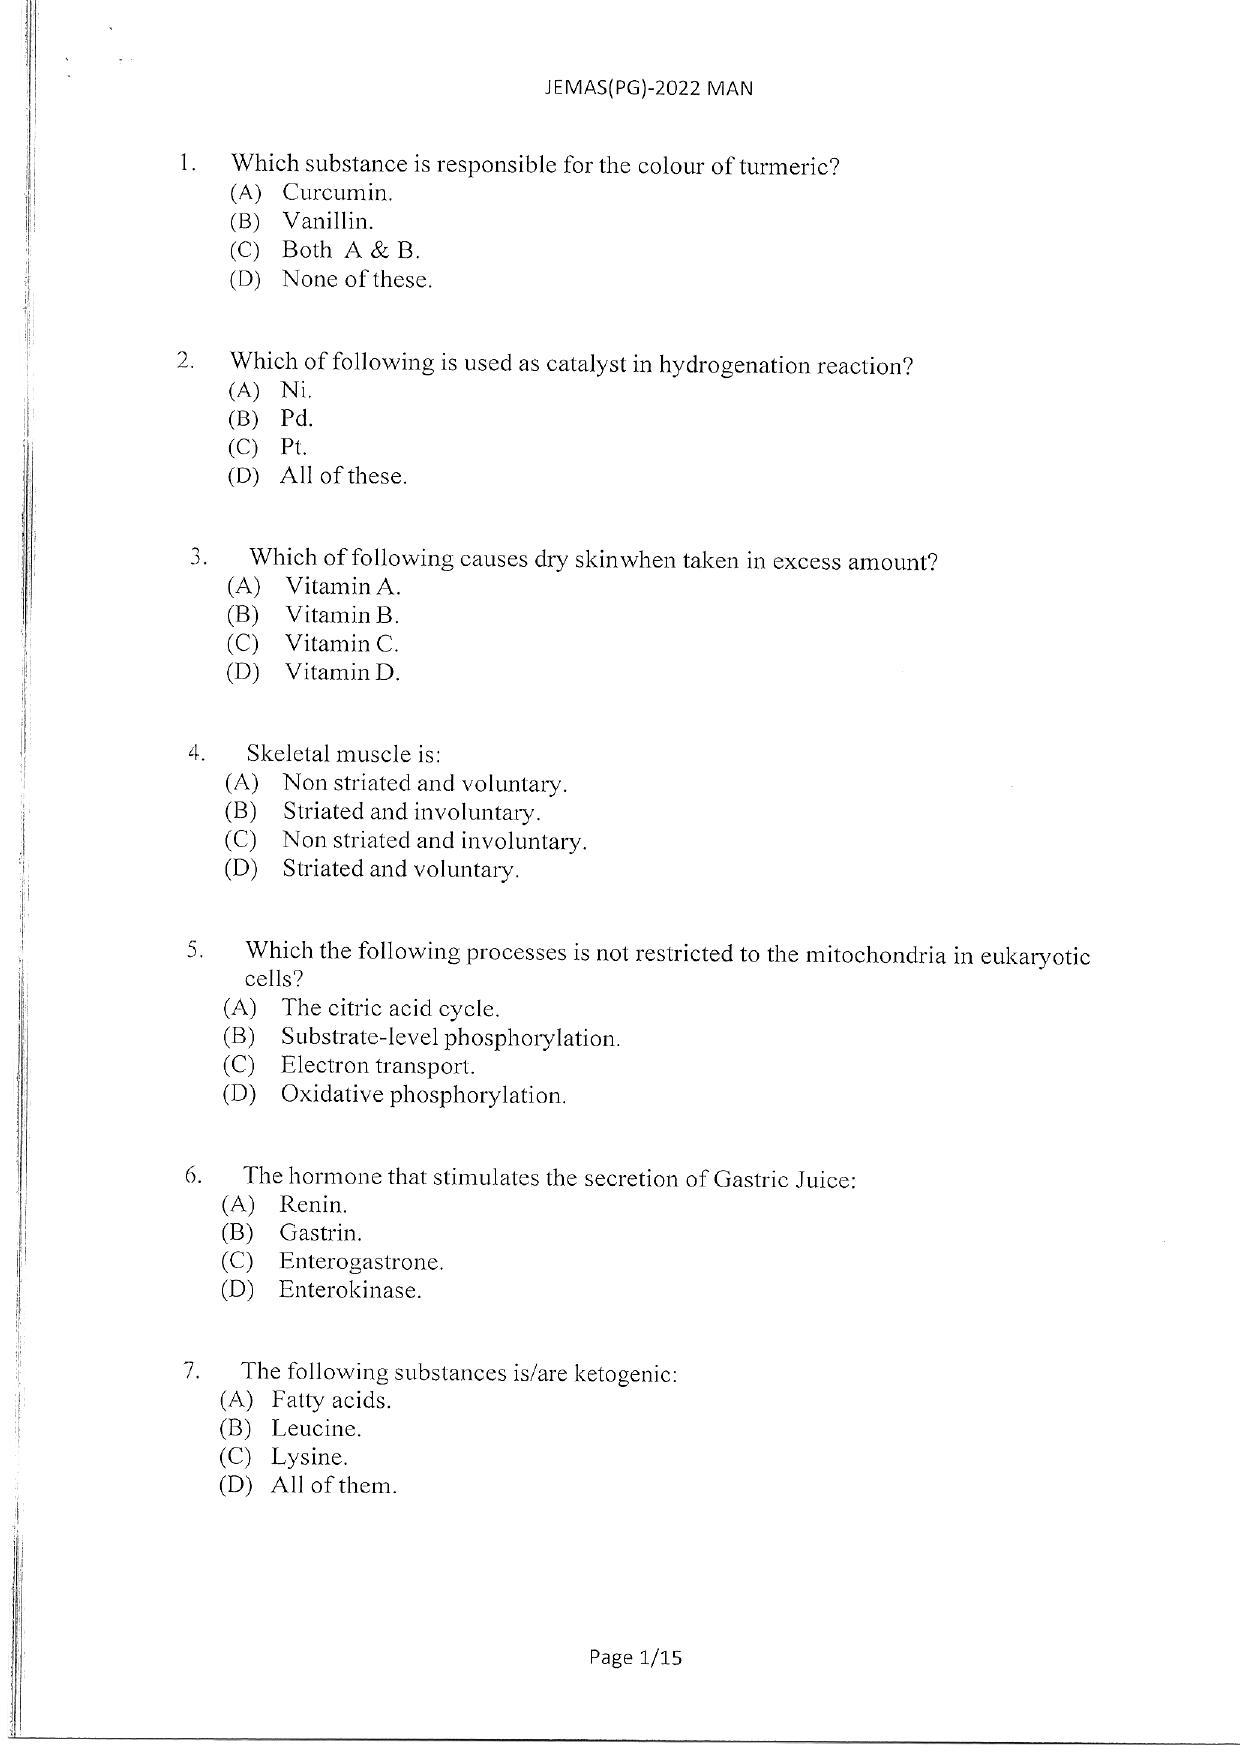 WBJEEB JEMAS (PG) 2022 MAN Question Paper - Page 3